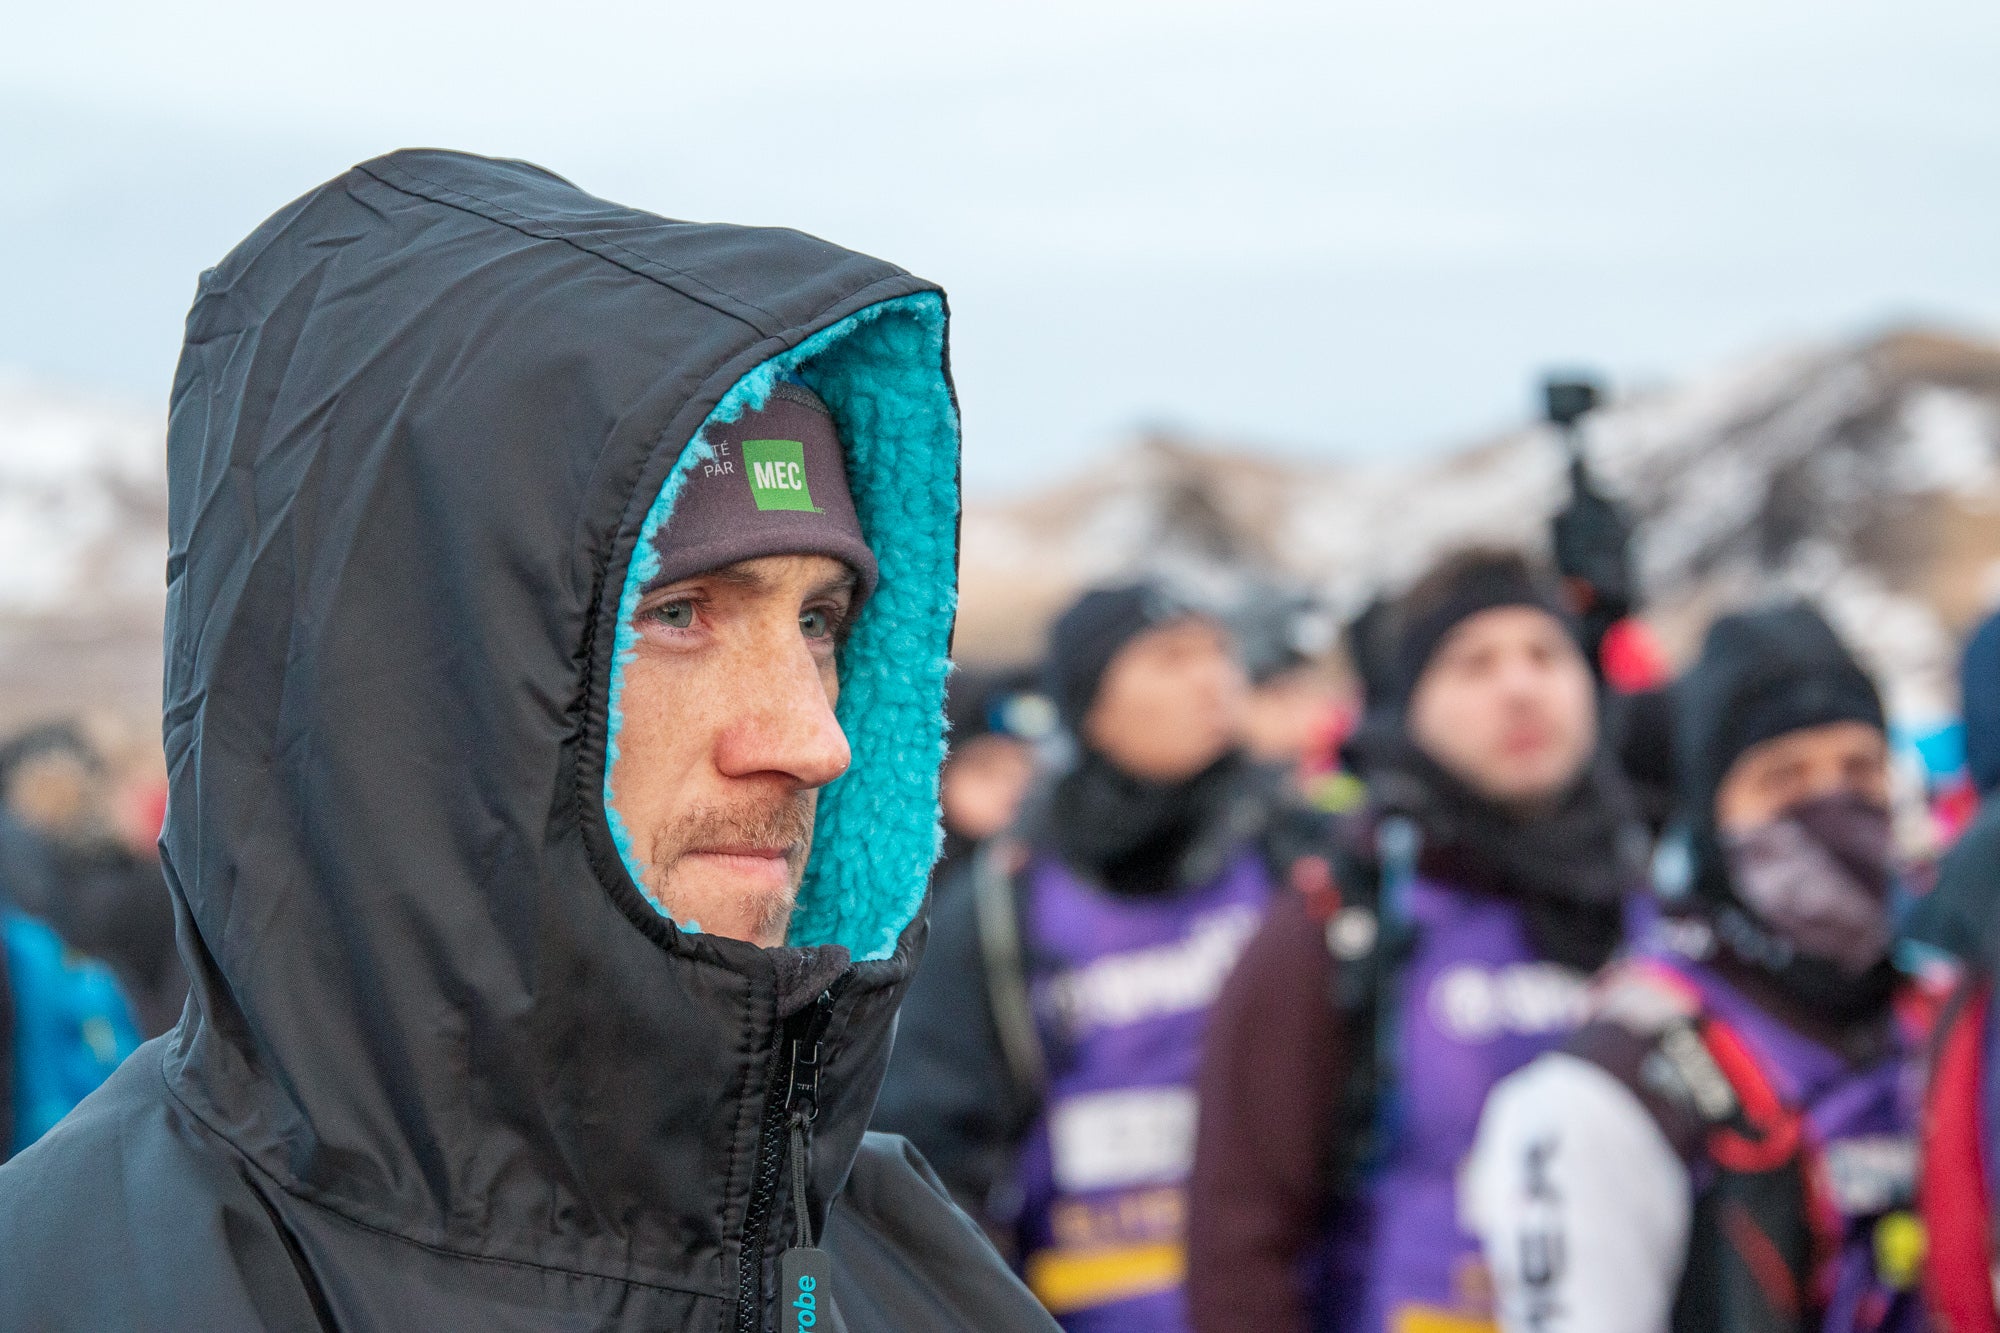 Jon Albon staying warm in his dryrobe pre-race